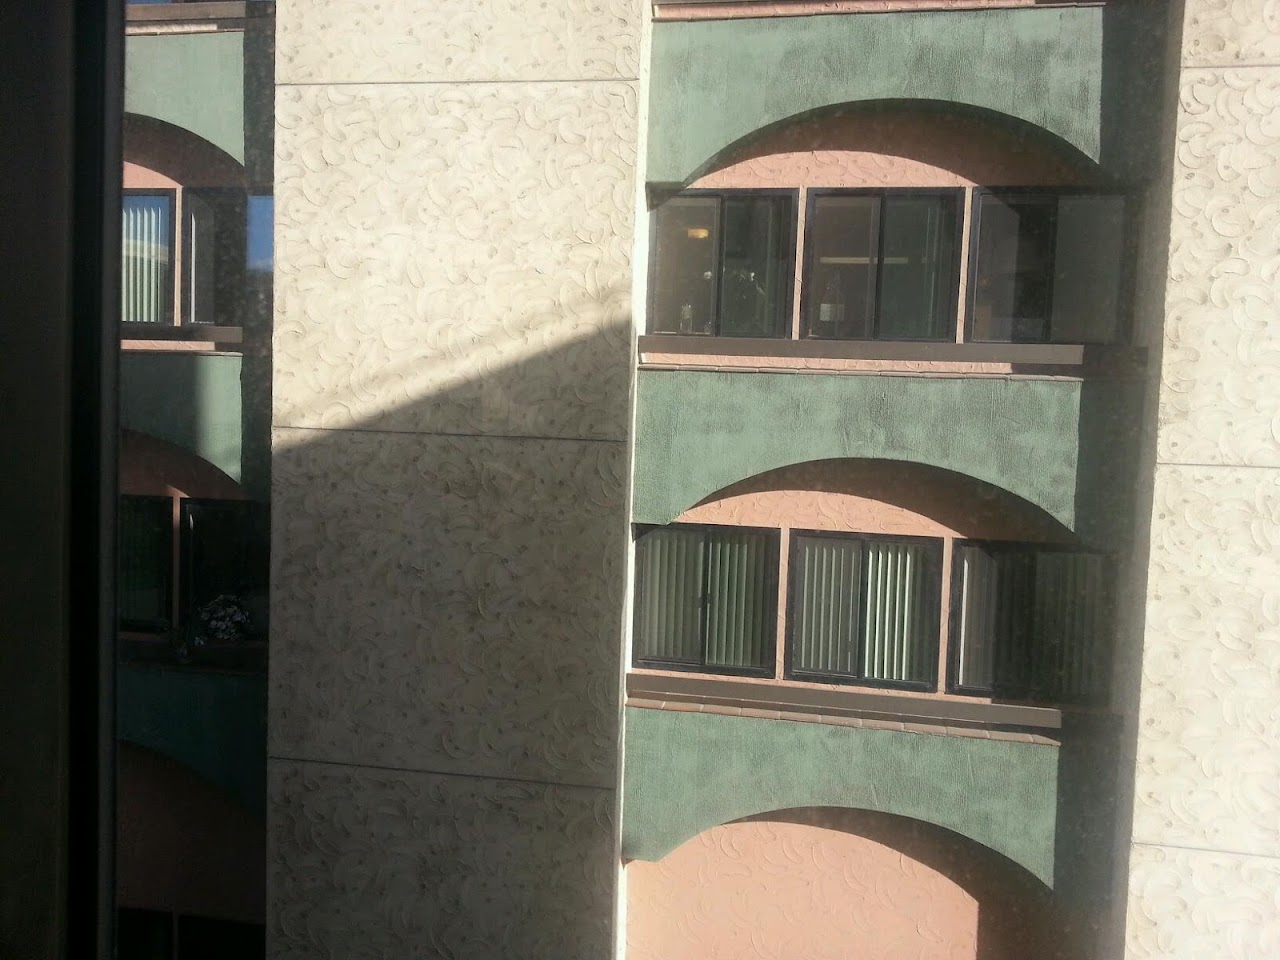 Photo of CASA DE LOS AMIGOS. Affordable housing located at 123 S CATALINA AVE REDONDO BEACH, CA 90277